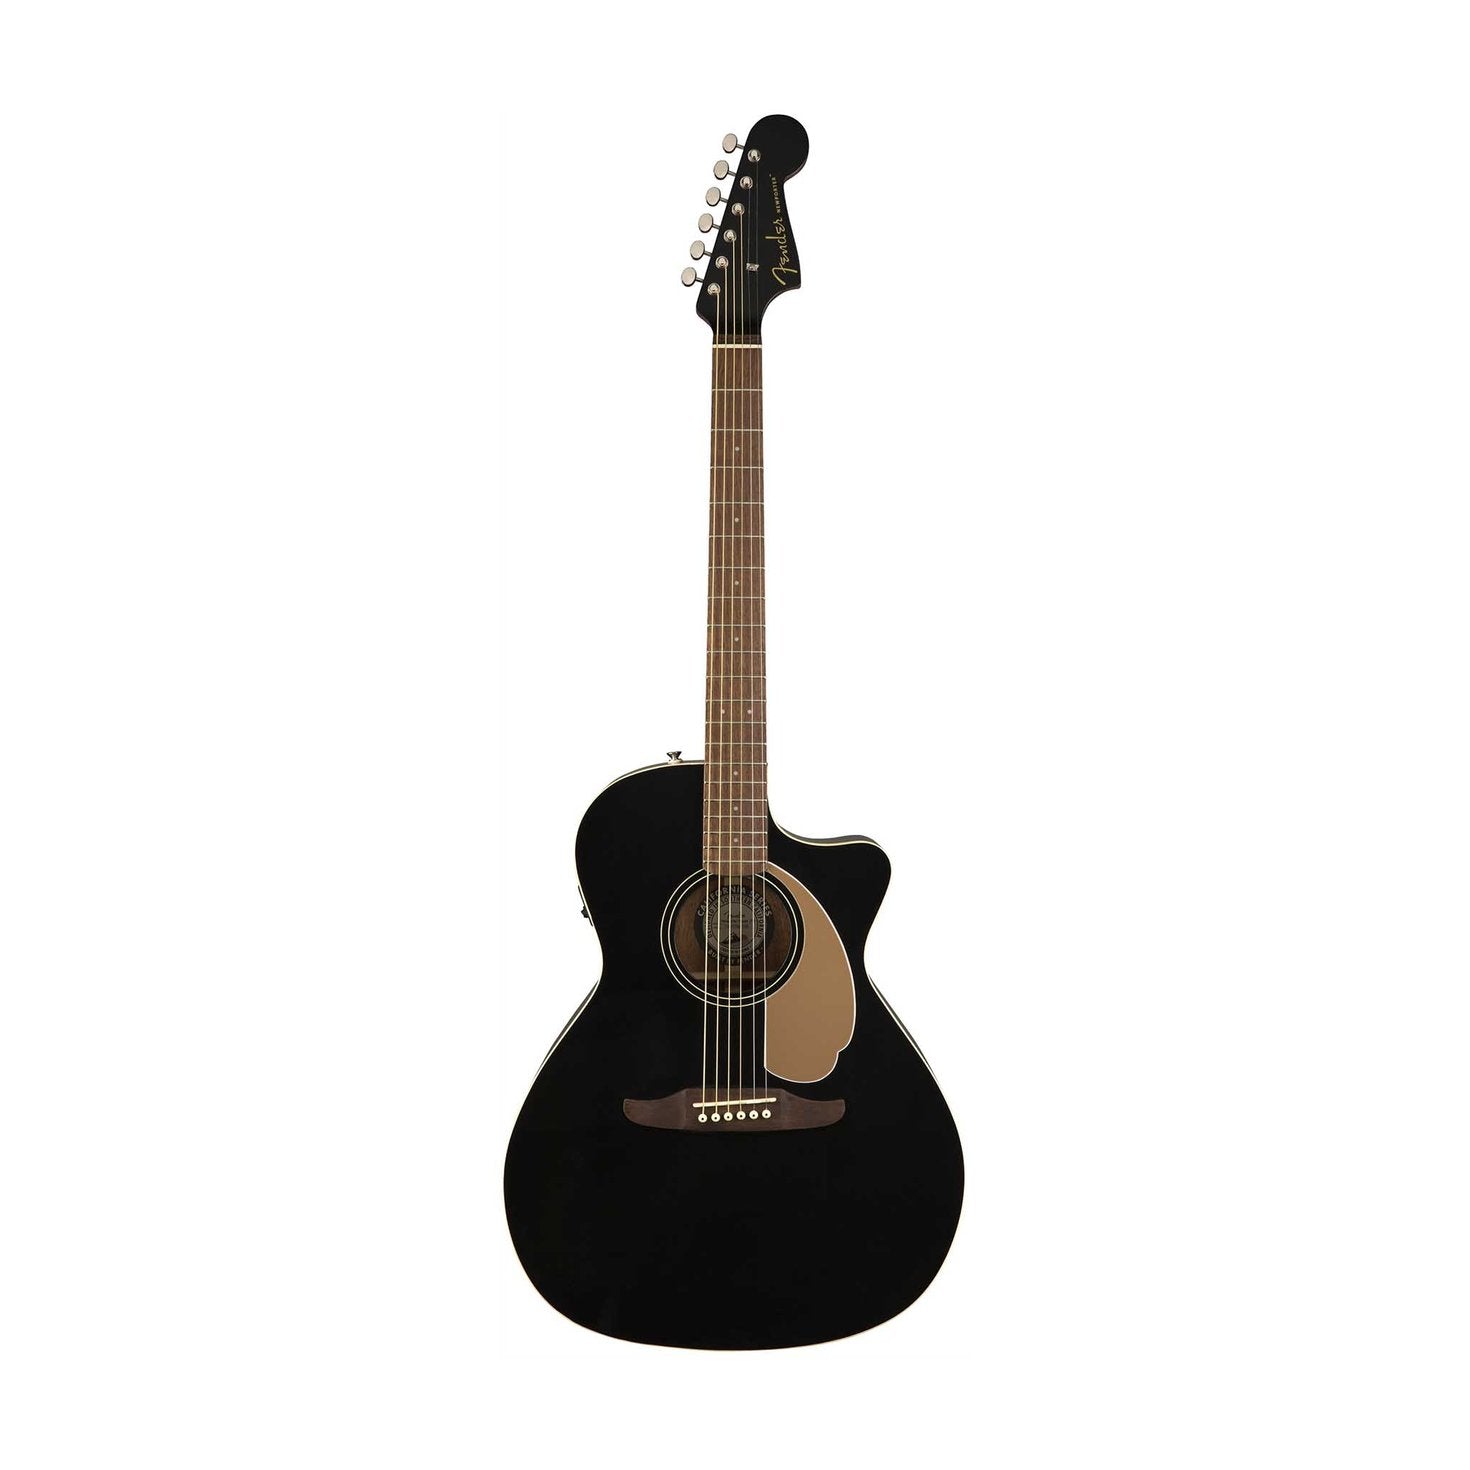 Fender Newporter Player Medium-Sized Acoustic Guitar, Jetty Black, FENDER, ACOUSTIC GUITAR, fender-acoustic-guitar-f03-097-0743-006, ZOSO MUSIC SDN BHD